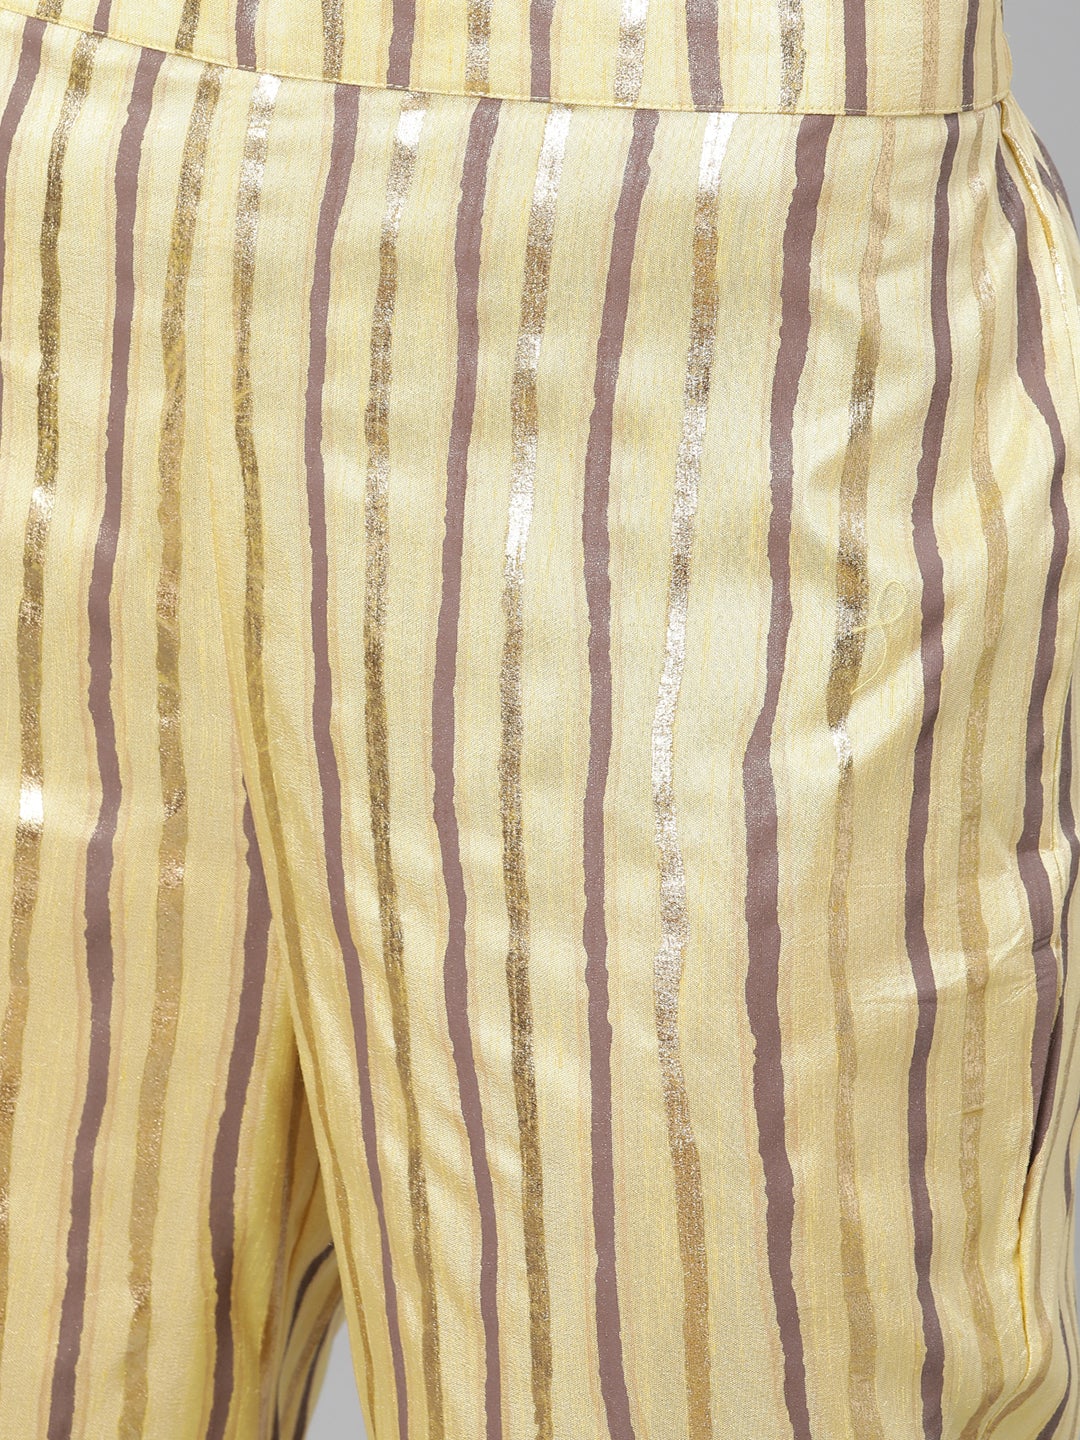 Mindhal Women's Yellow Color Foil Print Straight Kurta And Pant Set